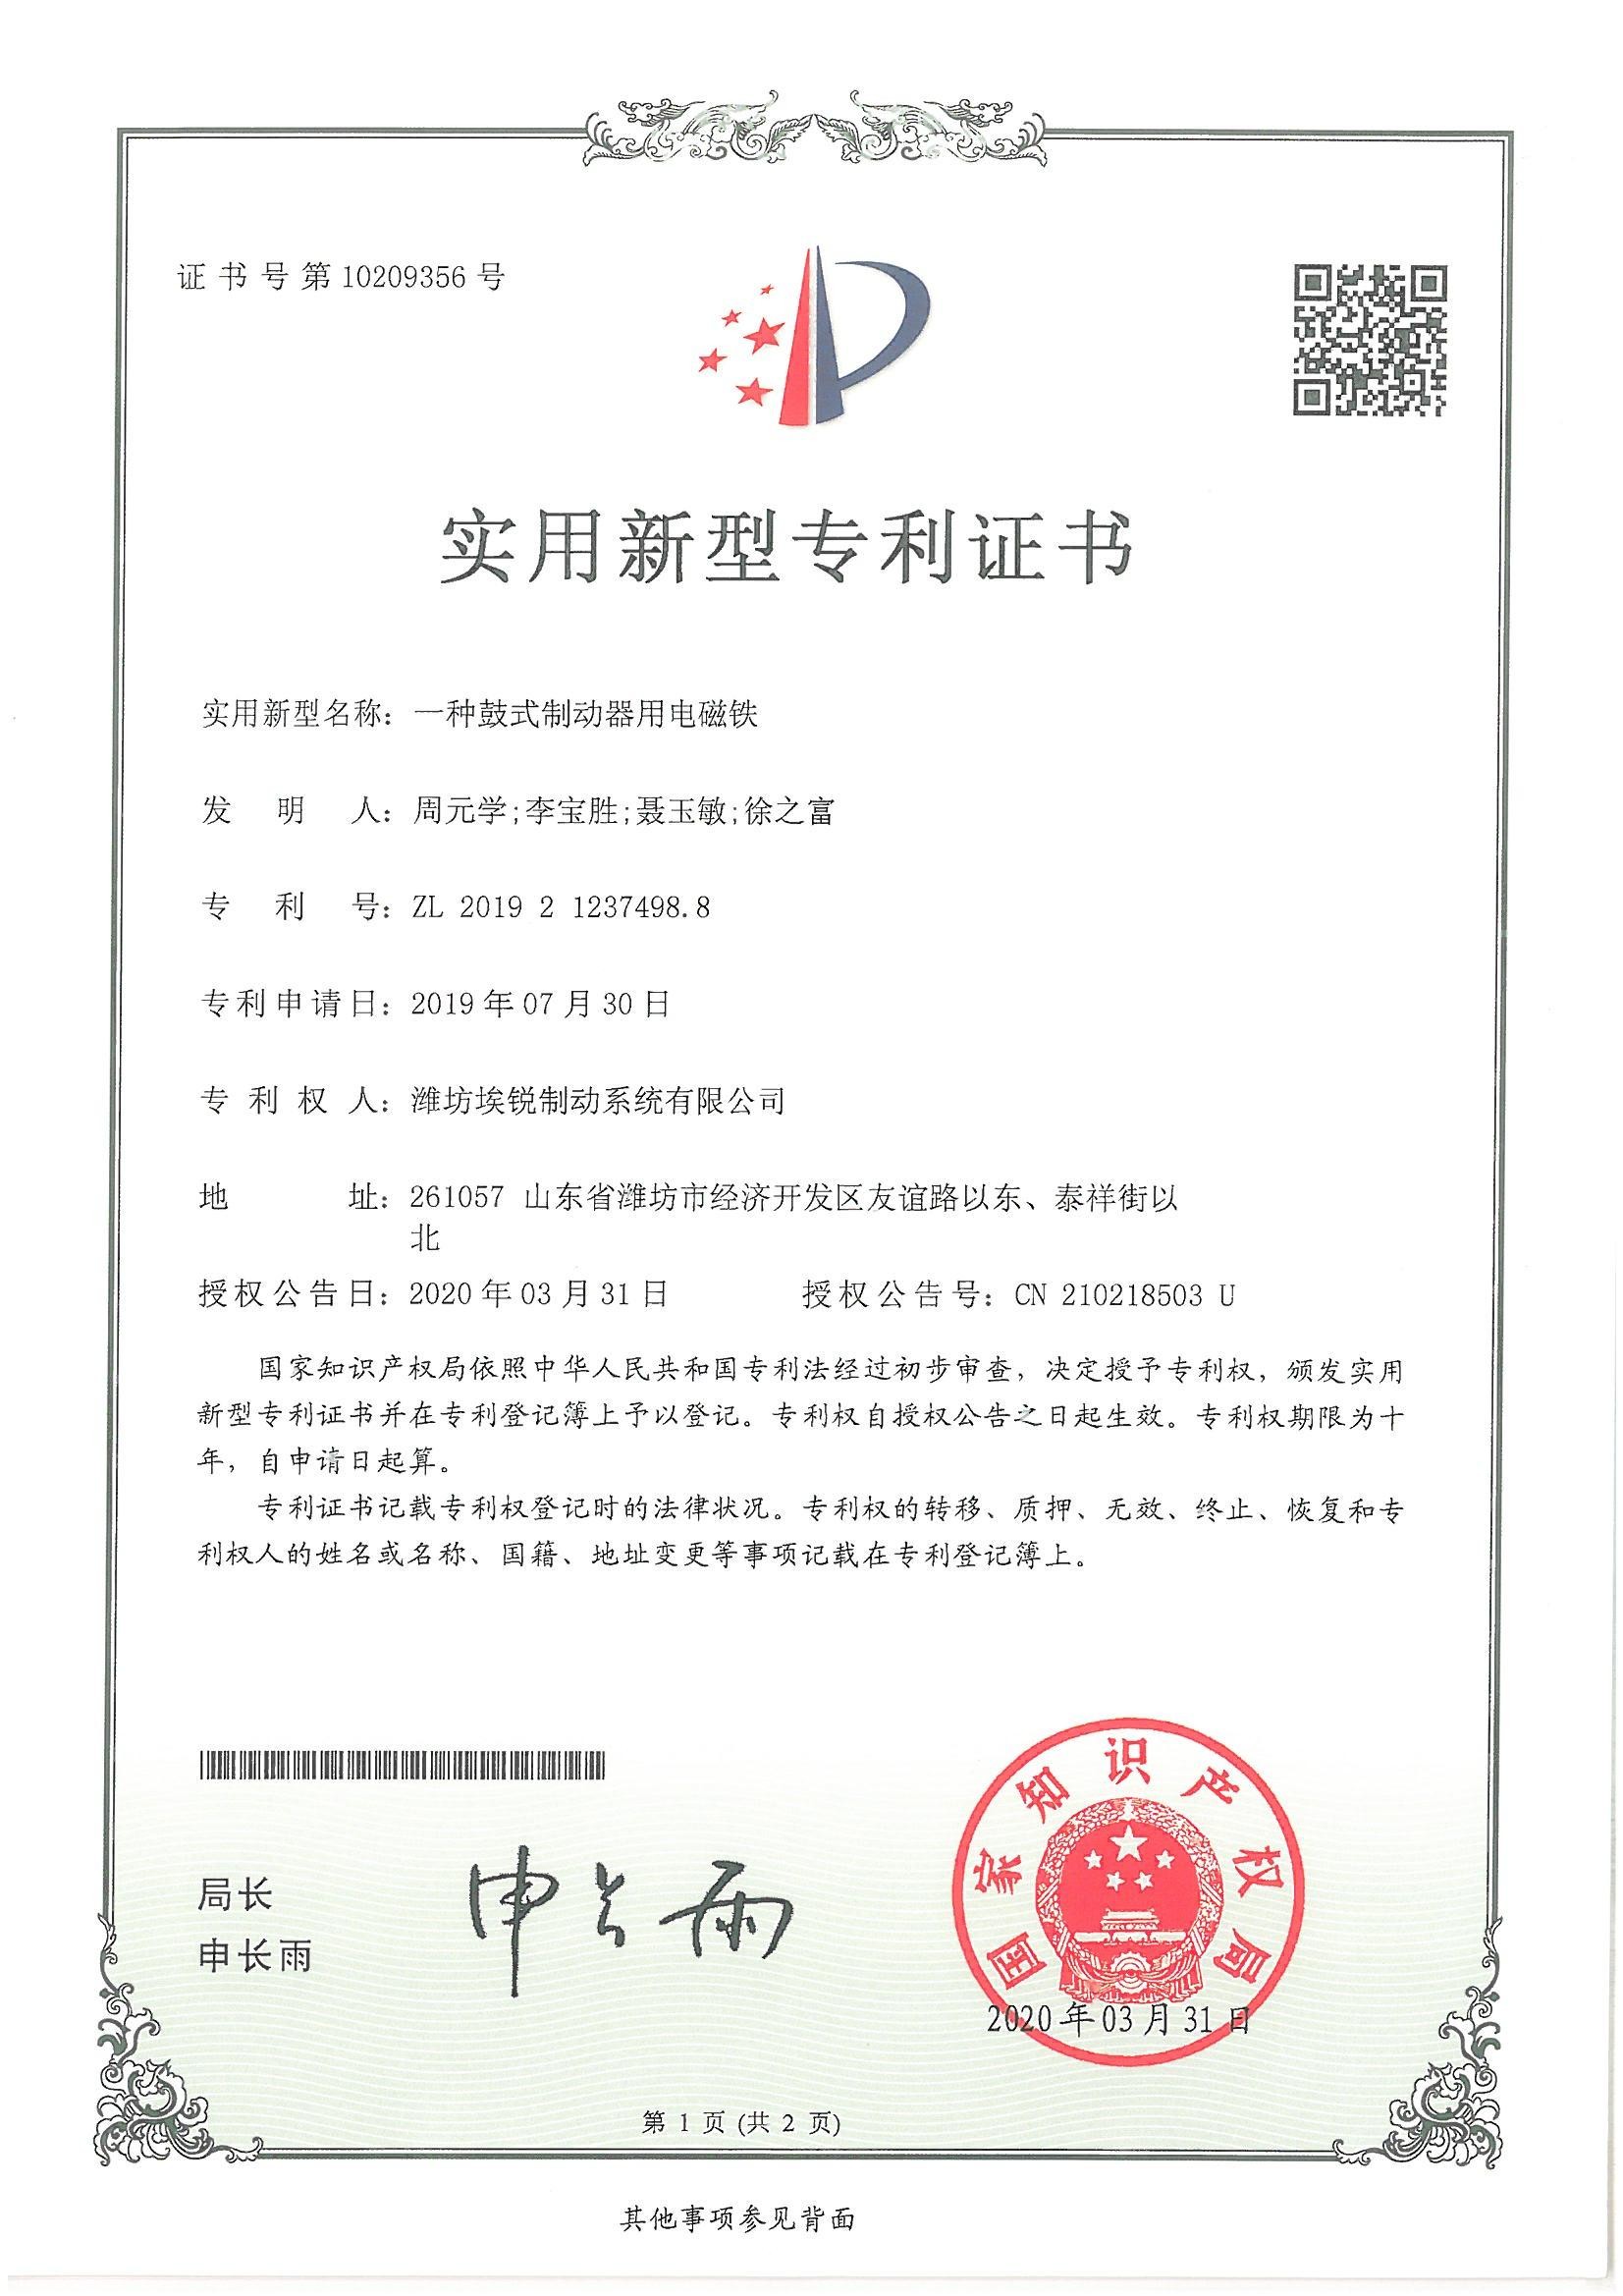 Weifang Airui Brake Systems Co., Ltd. Certifications